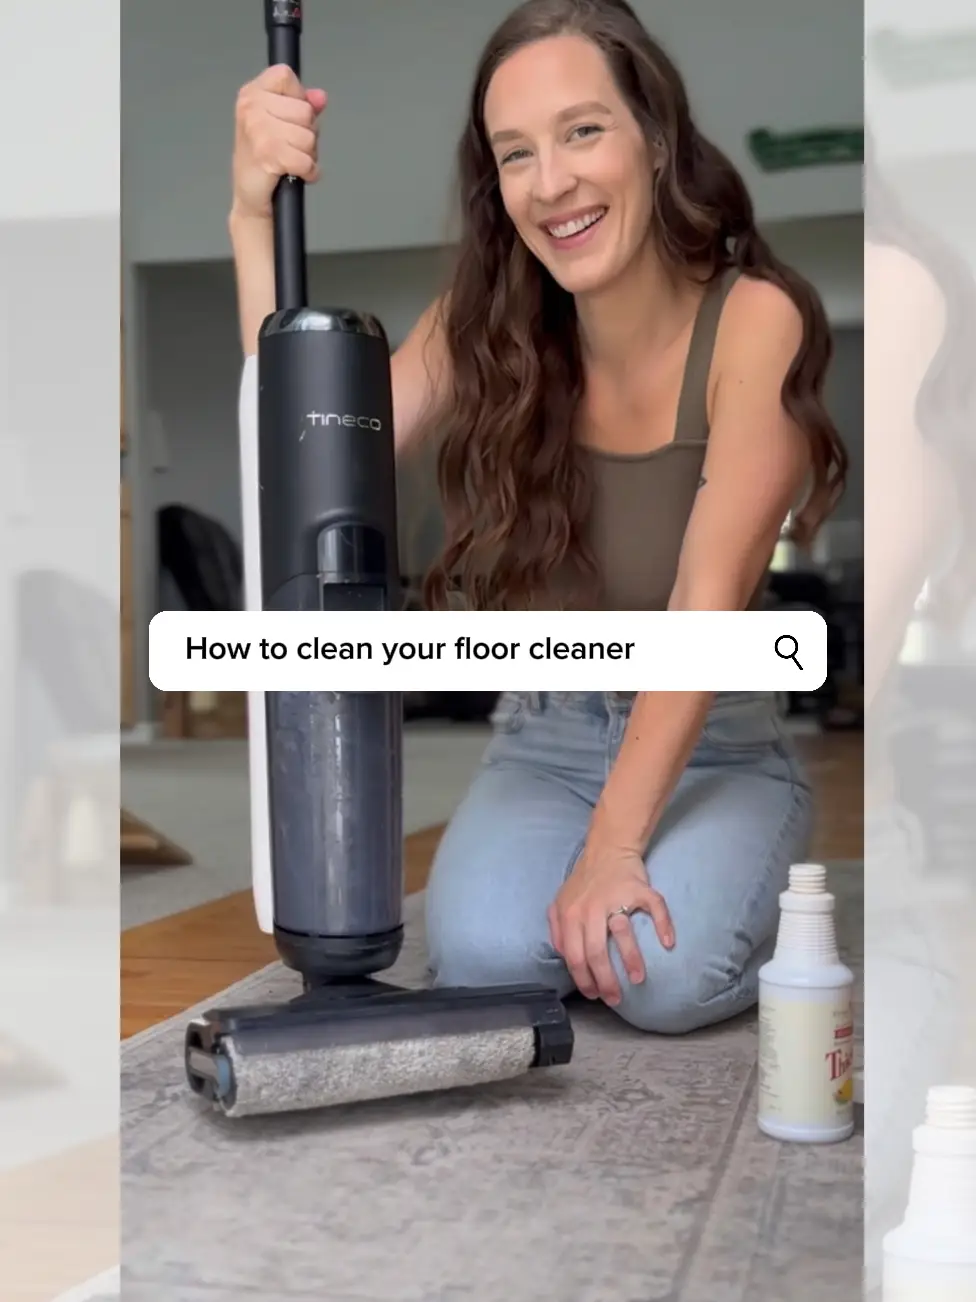 Tineco Floor ONE S5 is a huge upgrade to TikTok's viral floor-cleaning  sensation